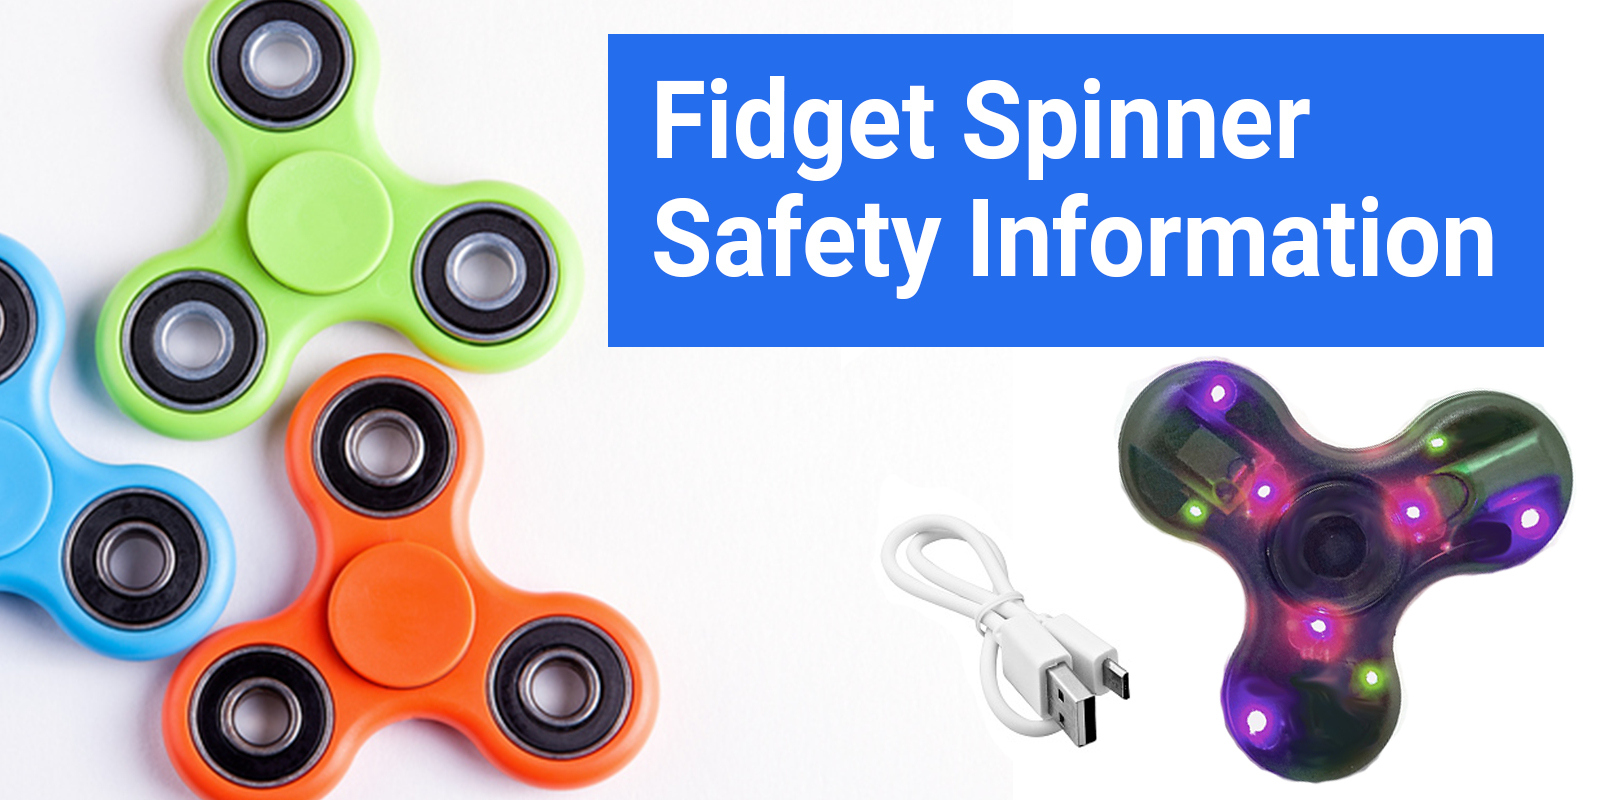 Safety Regulators Issue Safety Alert For Still-Popular Fidget Spinners